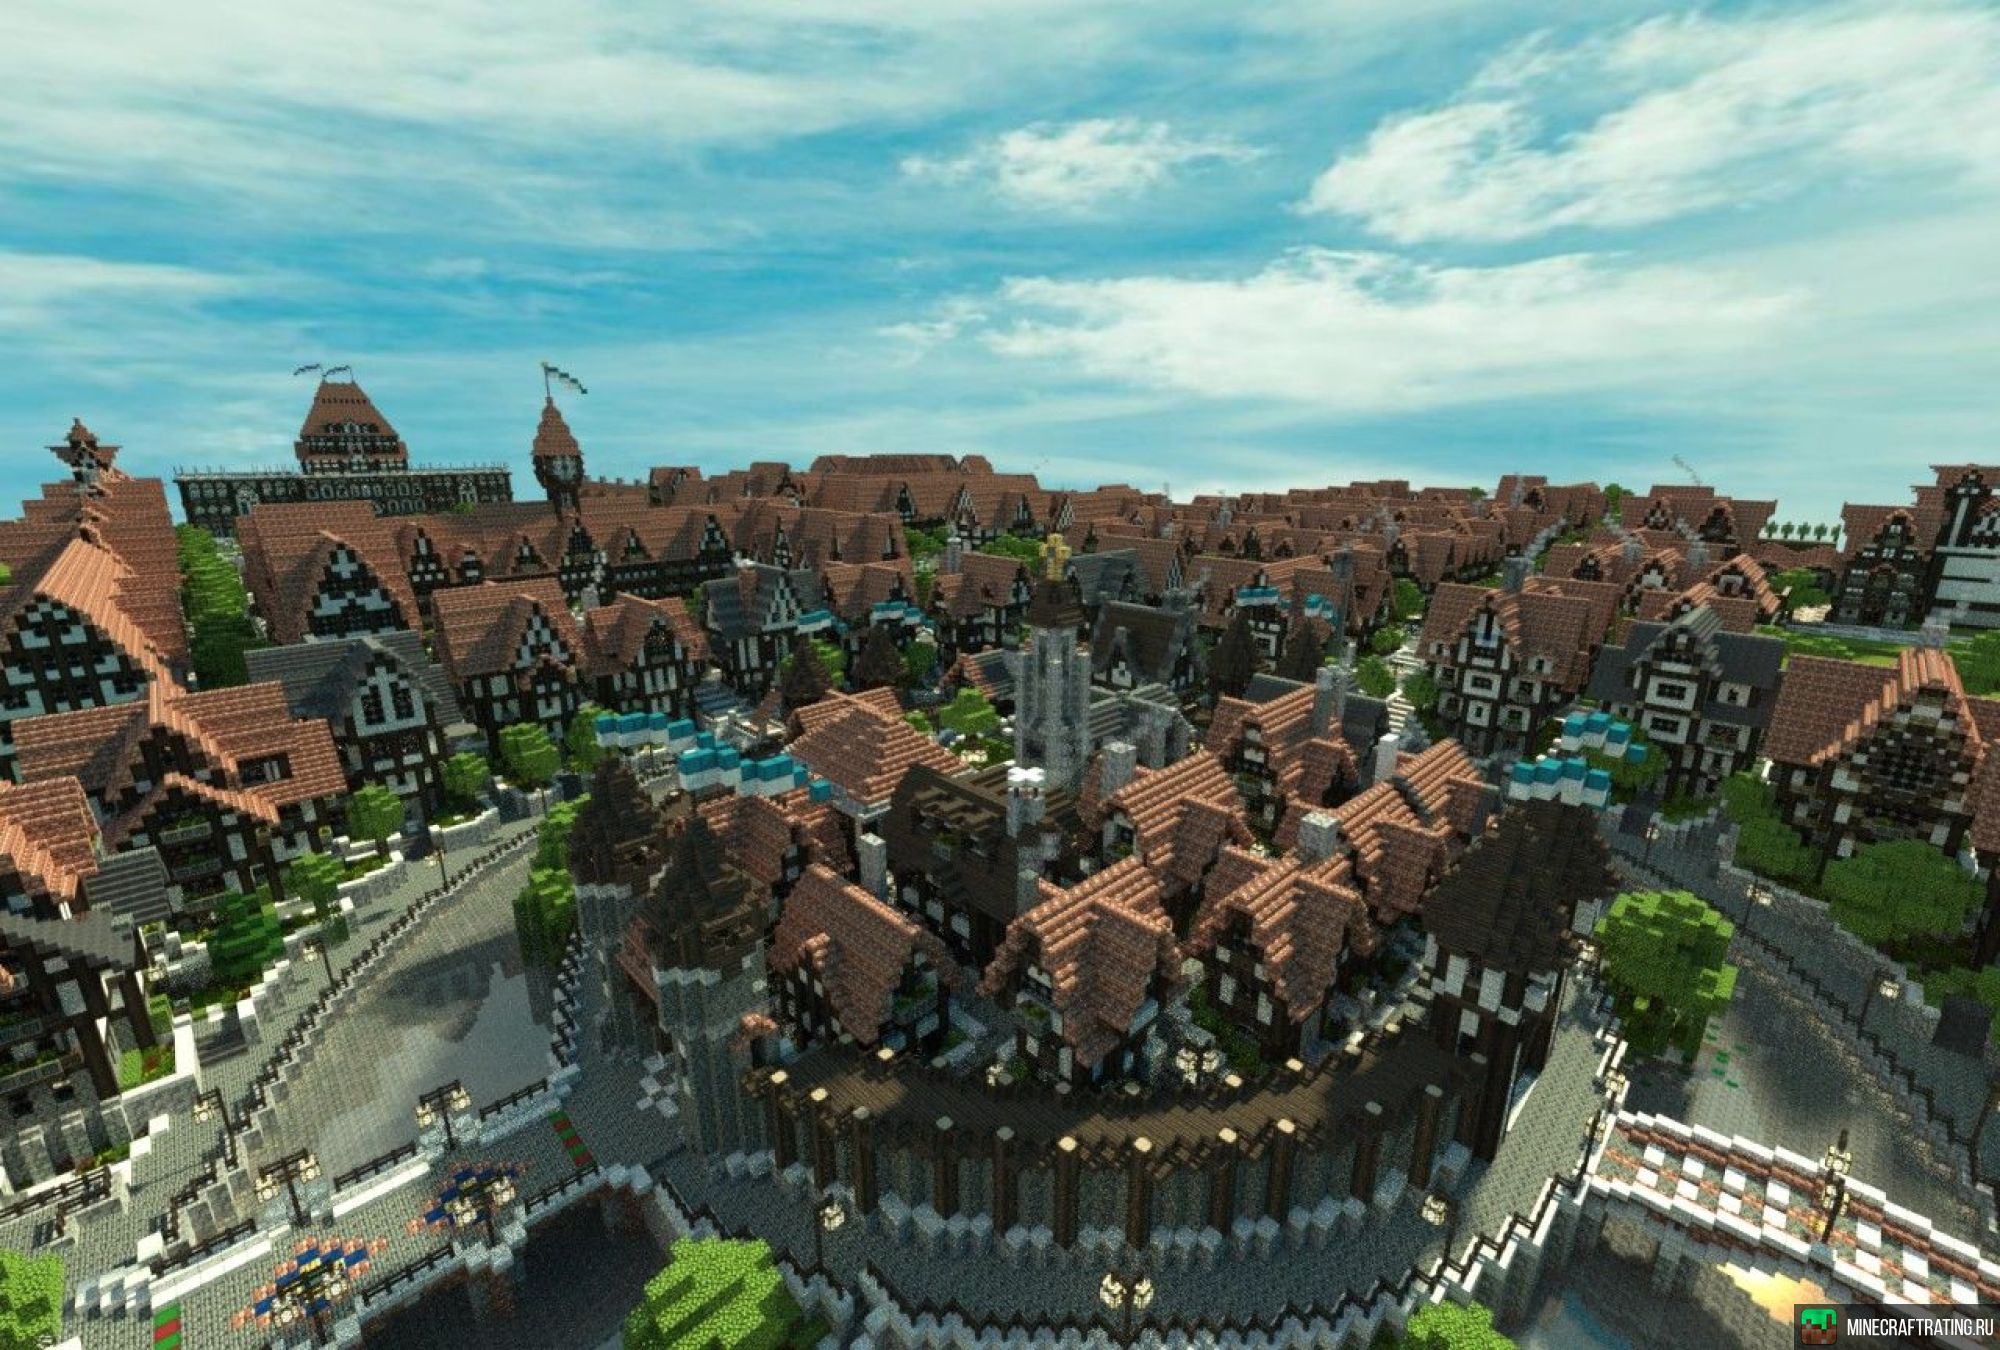 Town майнкрафт. Medieval City карта майнкрафт. Minecraft средневековый город. Майнкрафт город средневековья. Карта средневекового города майнкрафт.